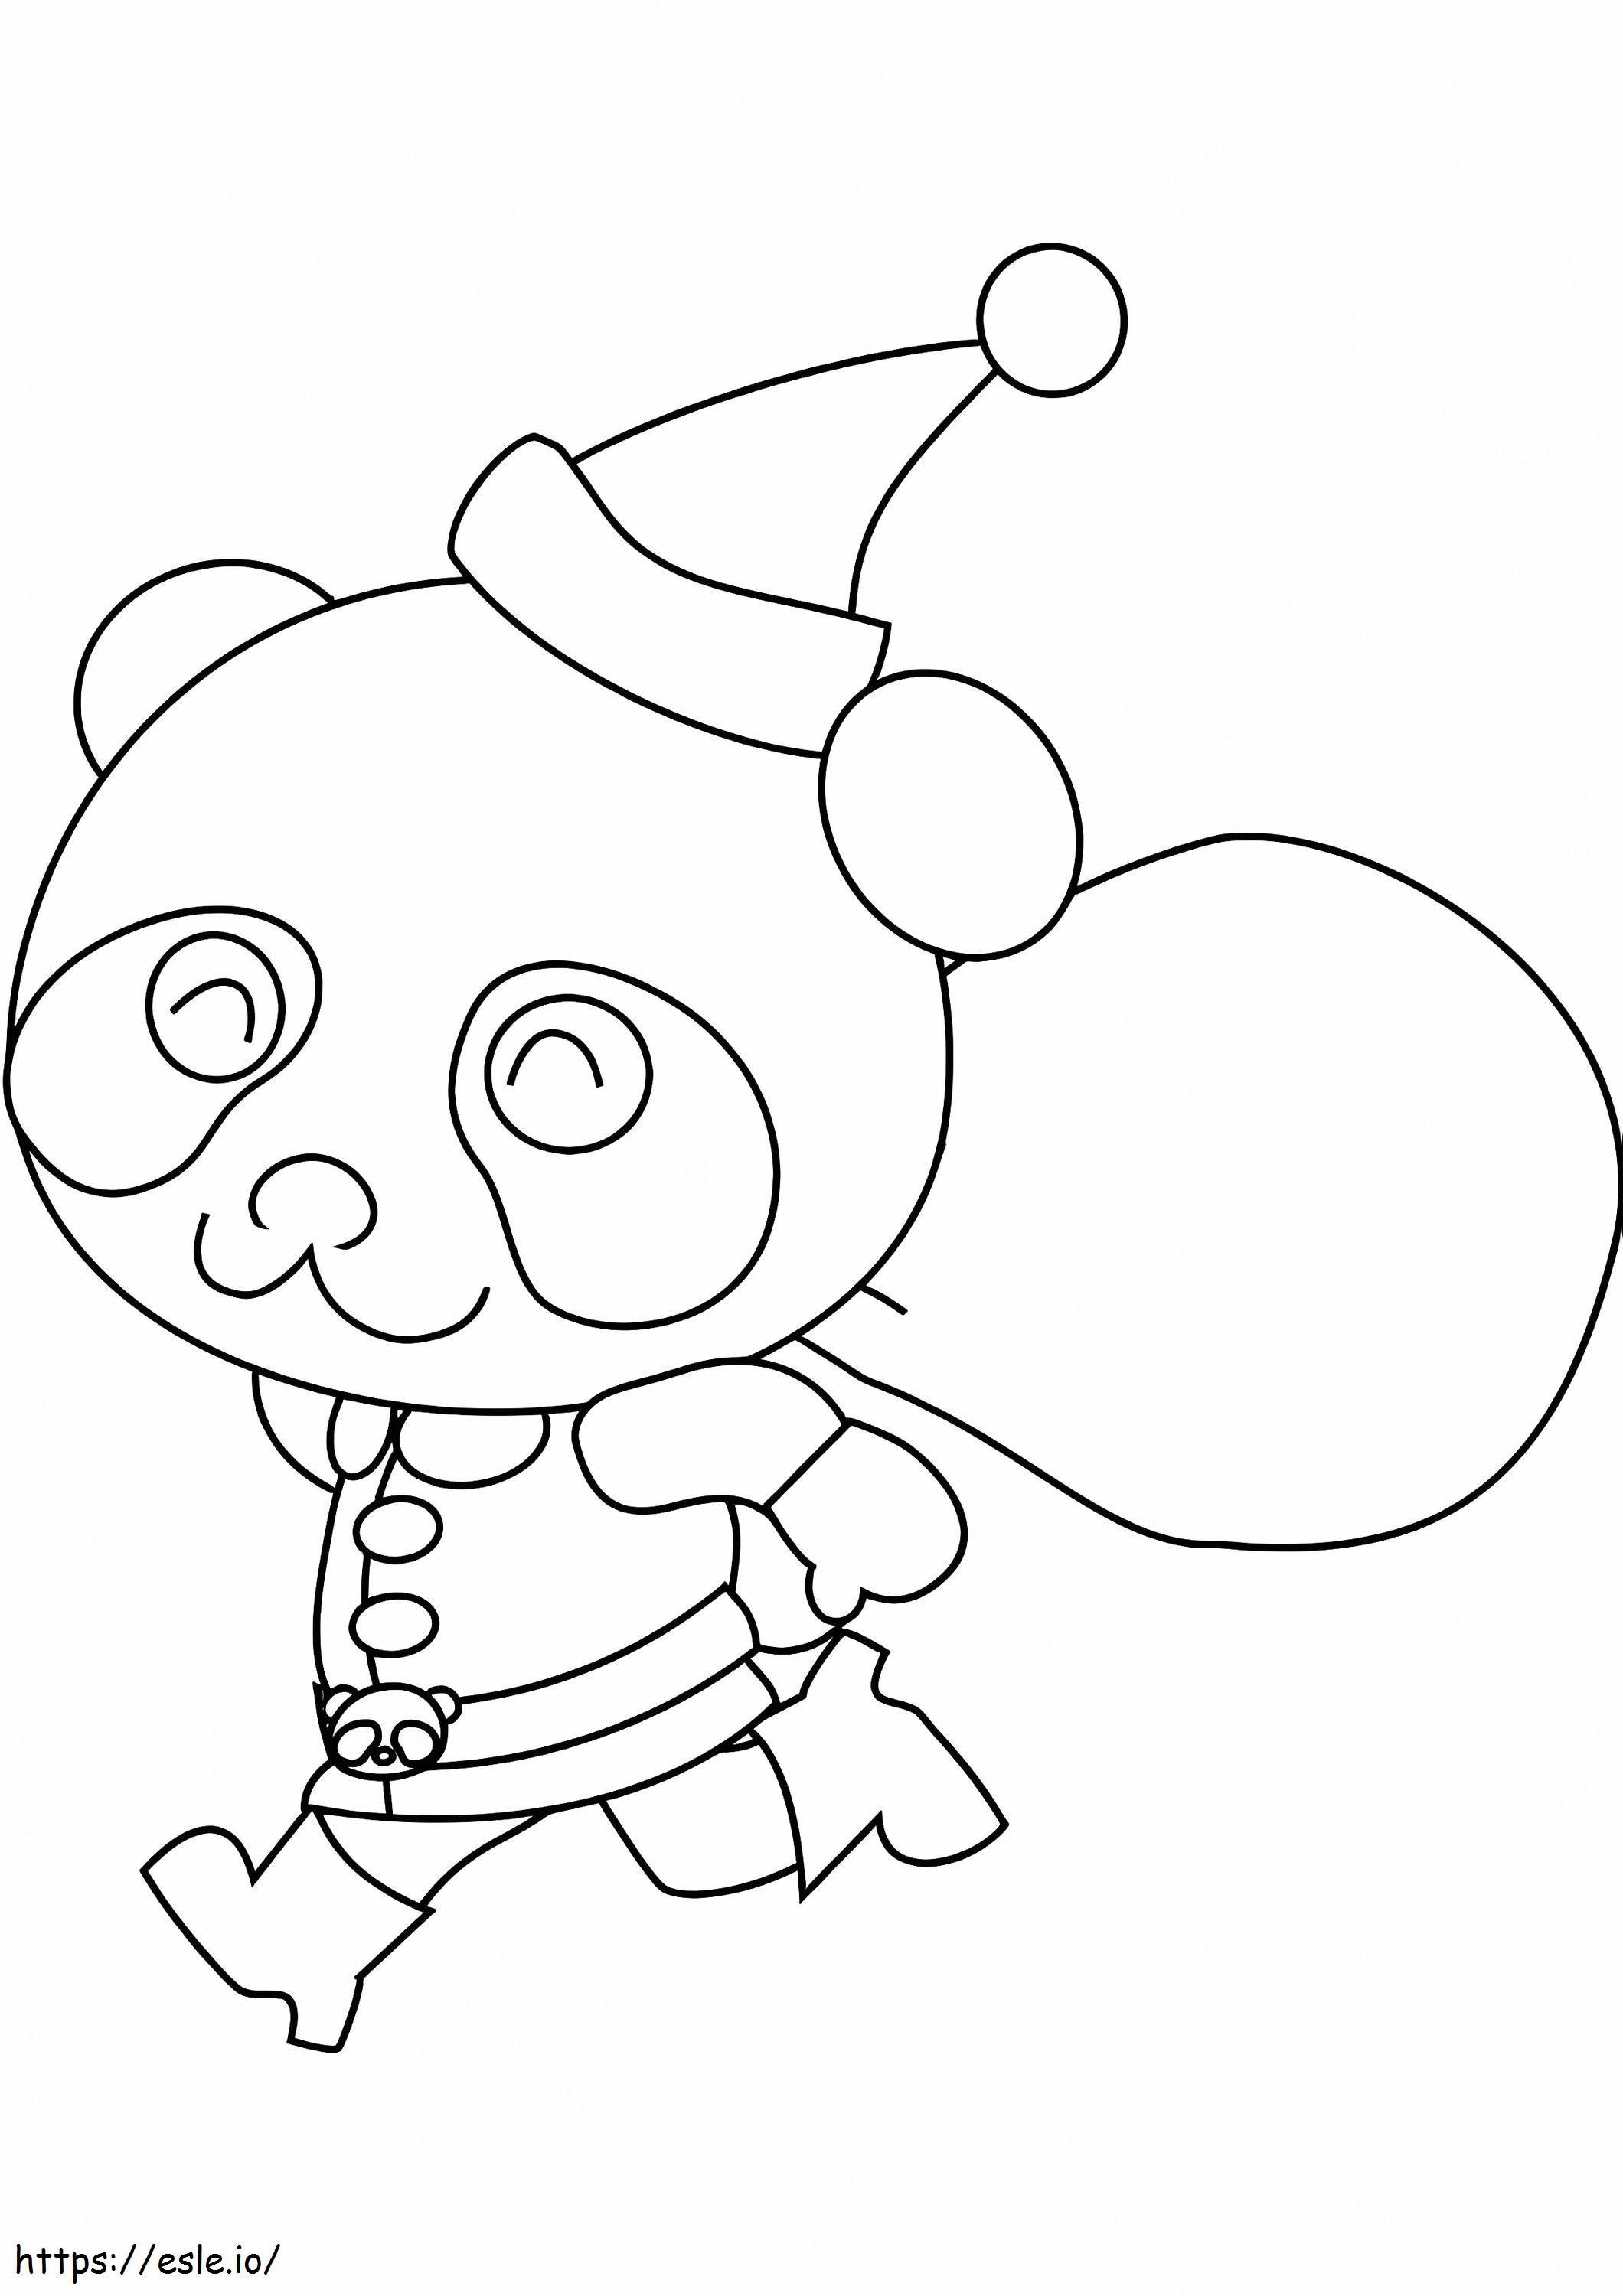 Christmas Panda coloring page